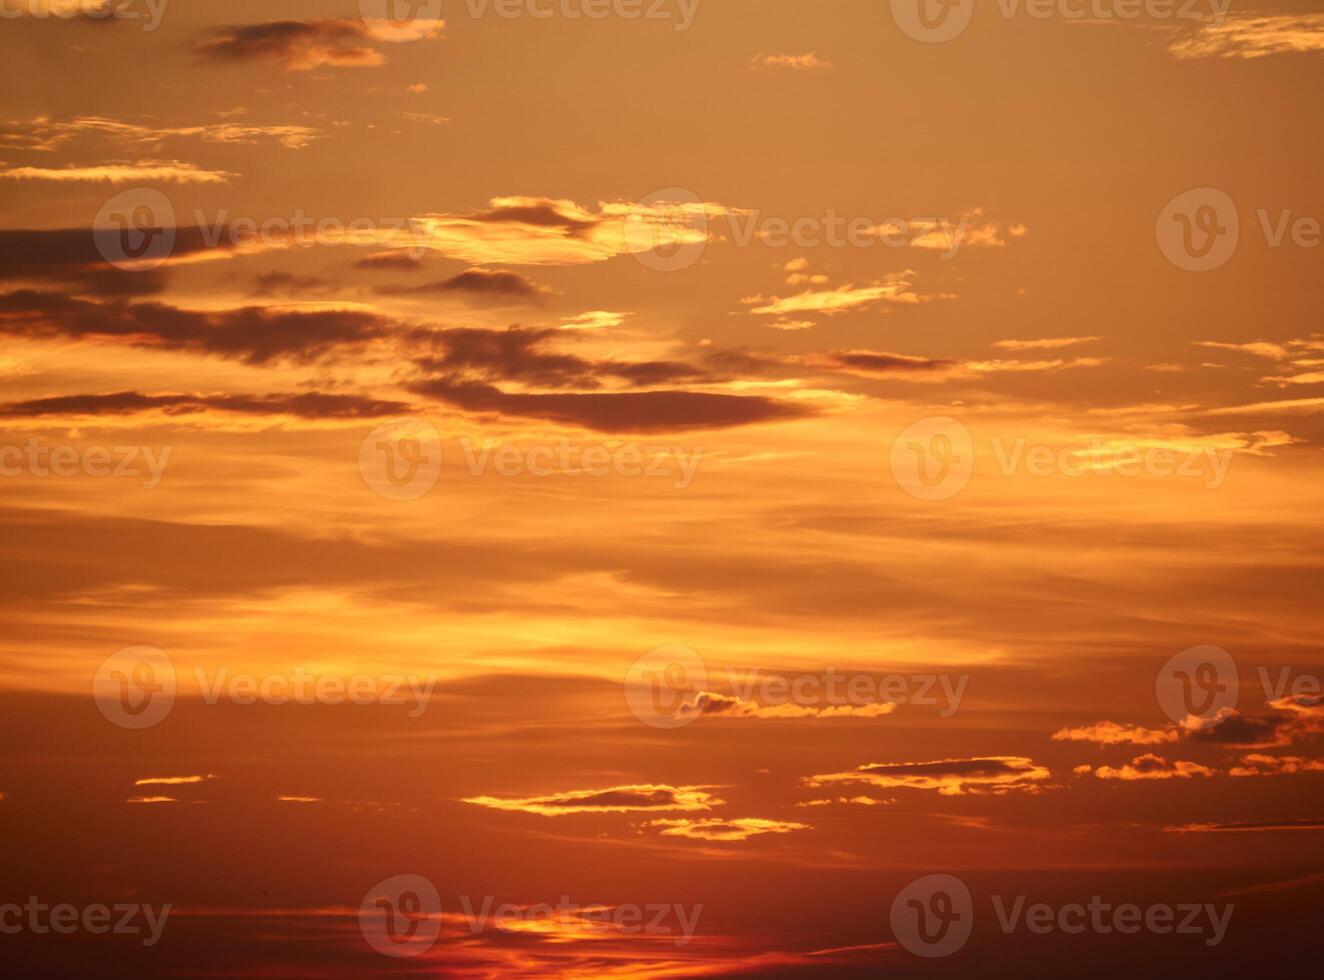 achtergrond - helder oranje zonsondergang lucht met wolken foto